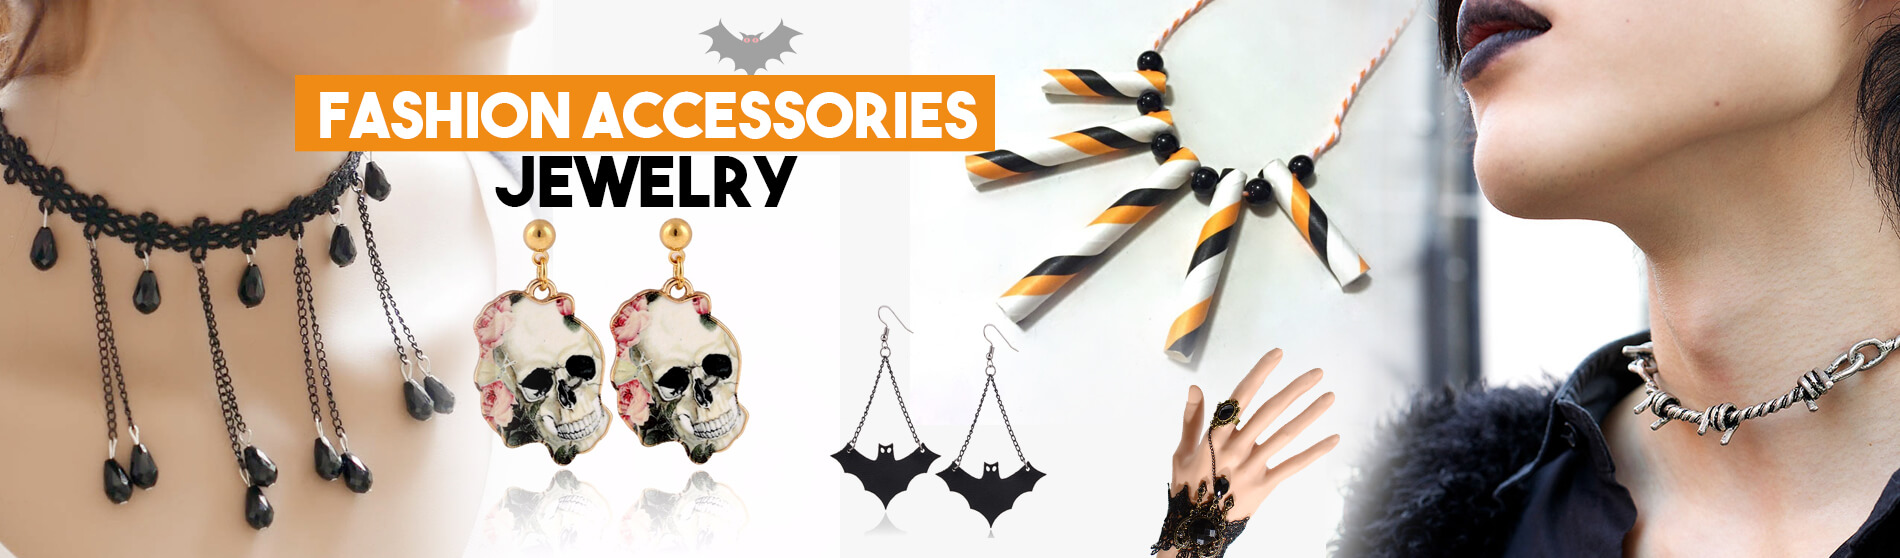 Glendale Halloween : Fashion-Accessories-Jewelry